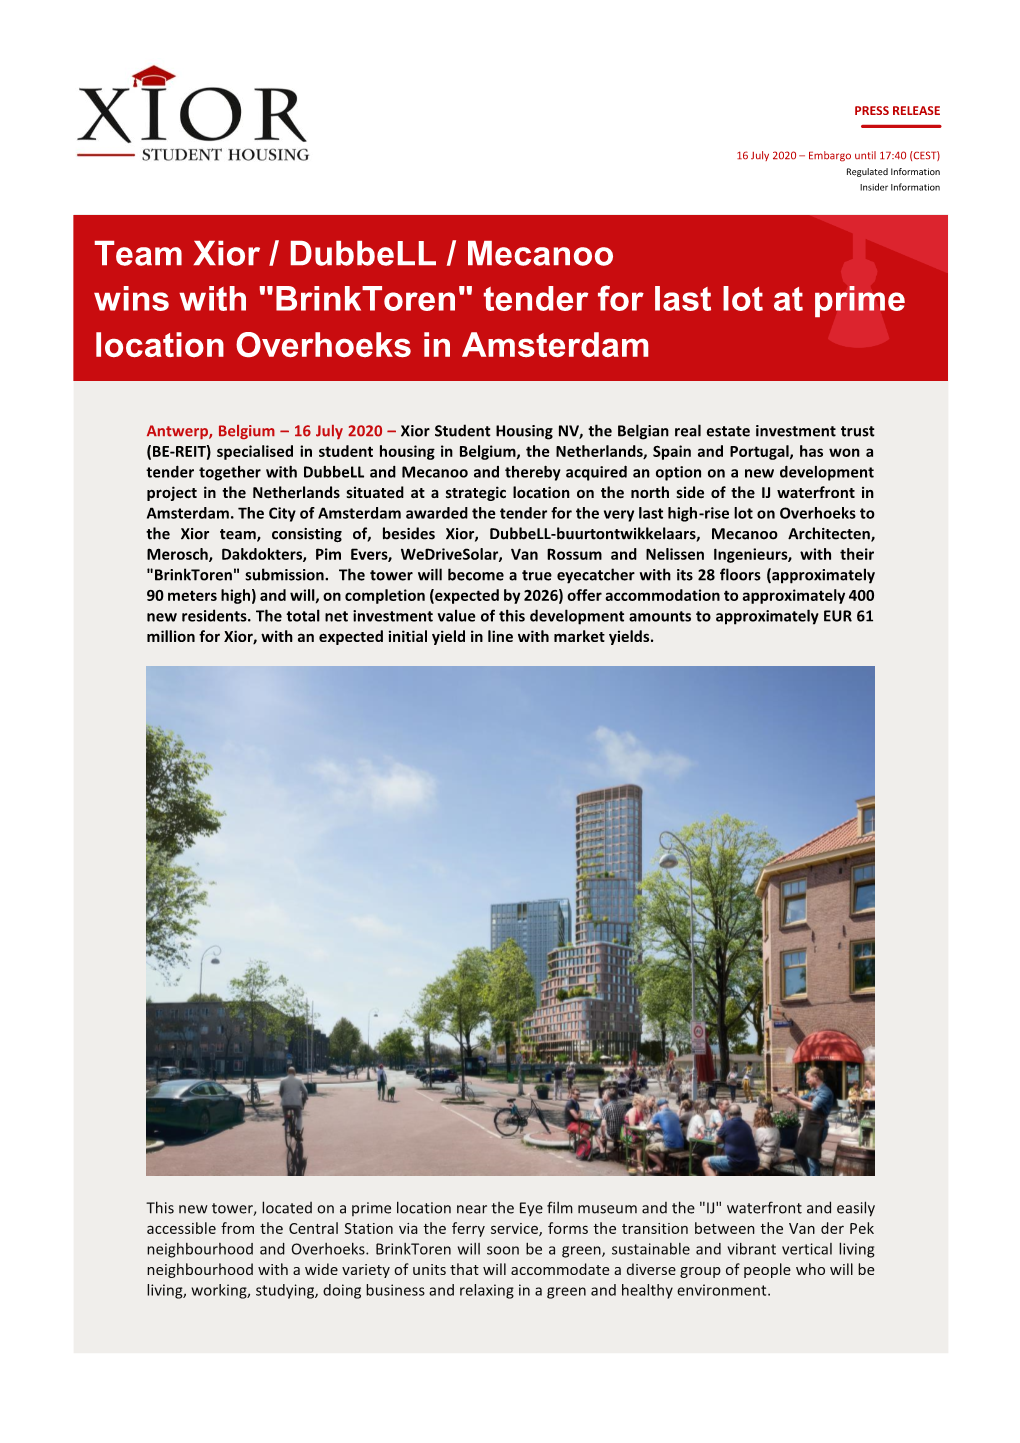 Team Xior / Dubbell / Mecanoo Wins with "Brinktoren" Tender for Last Lot at Prime Location Overhoeks in Amsterdam